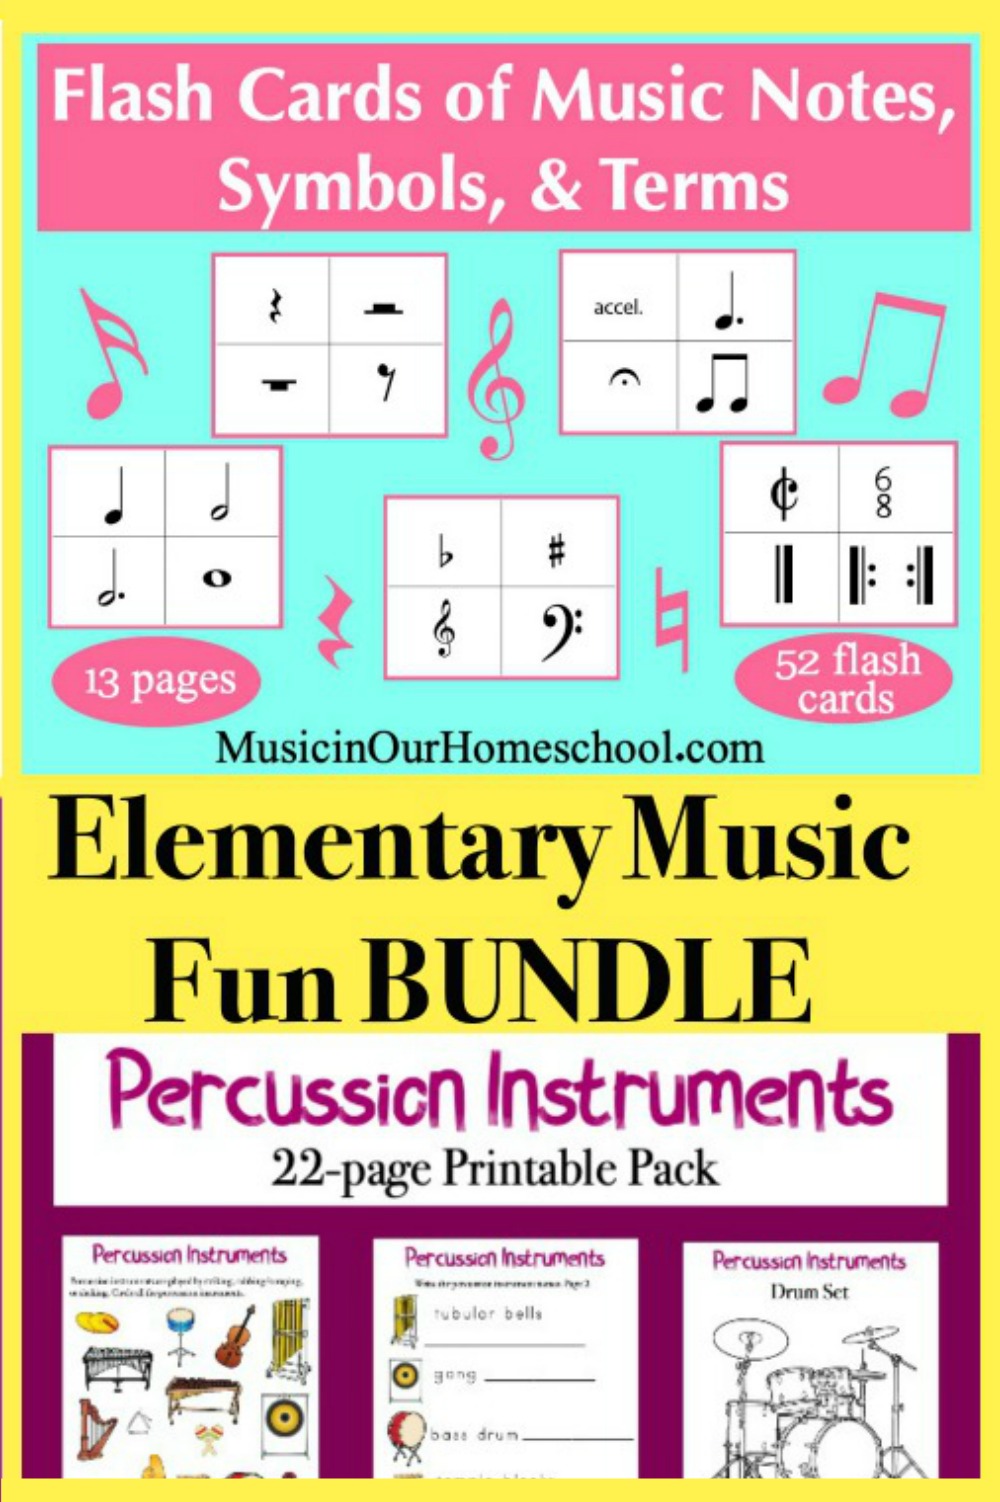 Elementary Music Fun BUNDLE